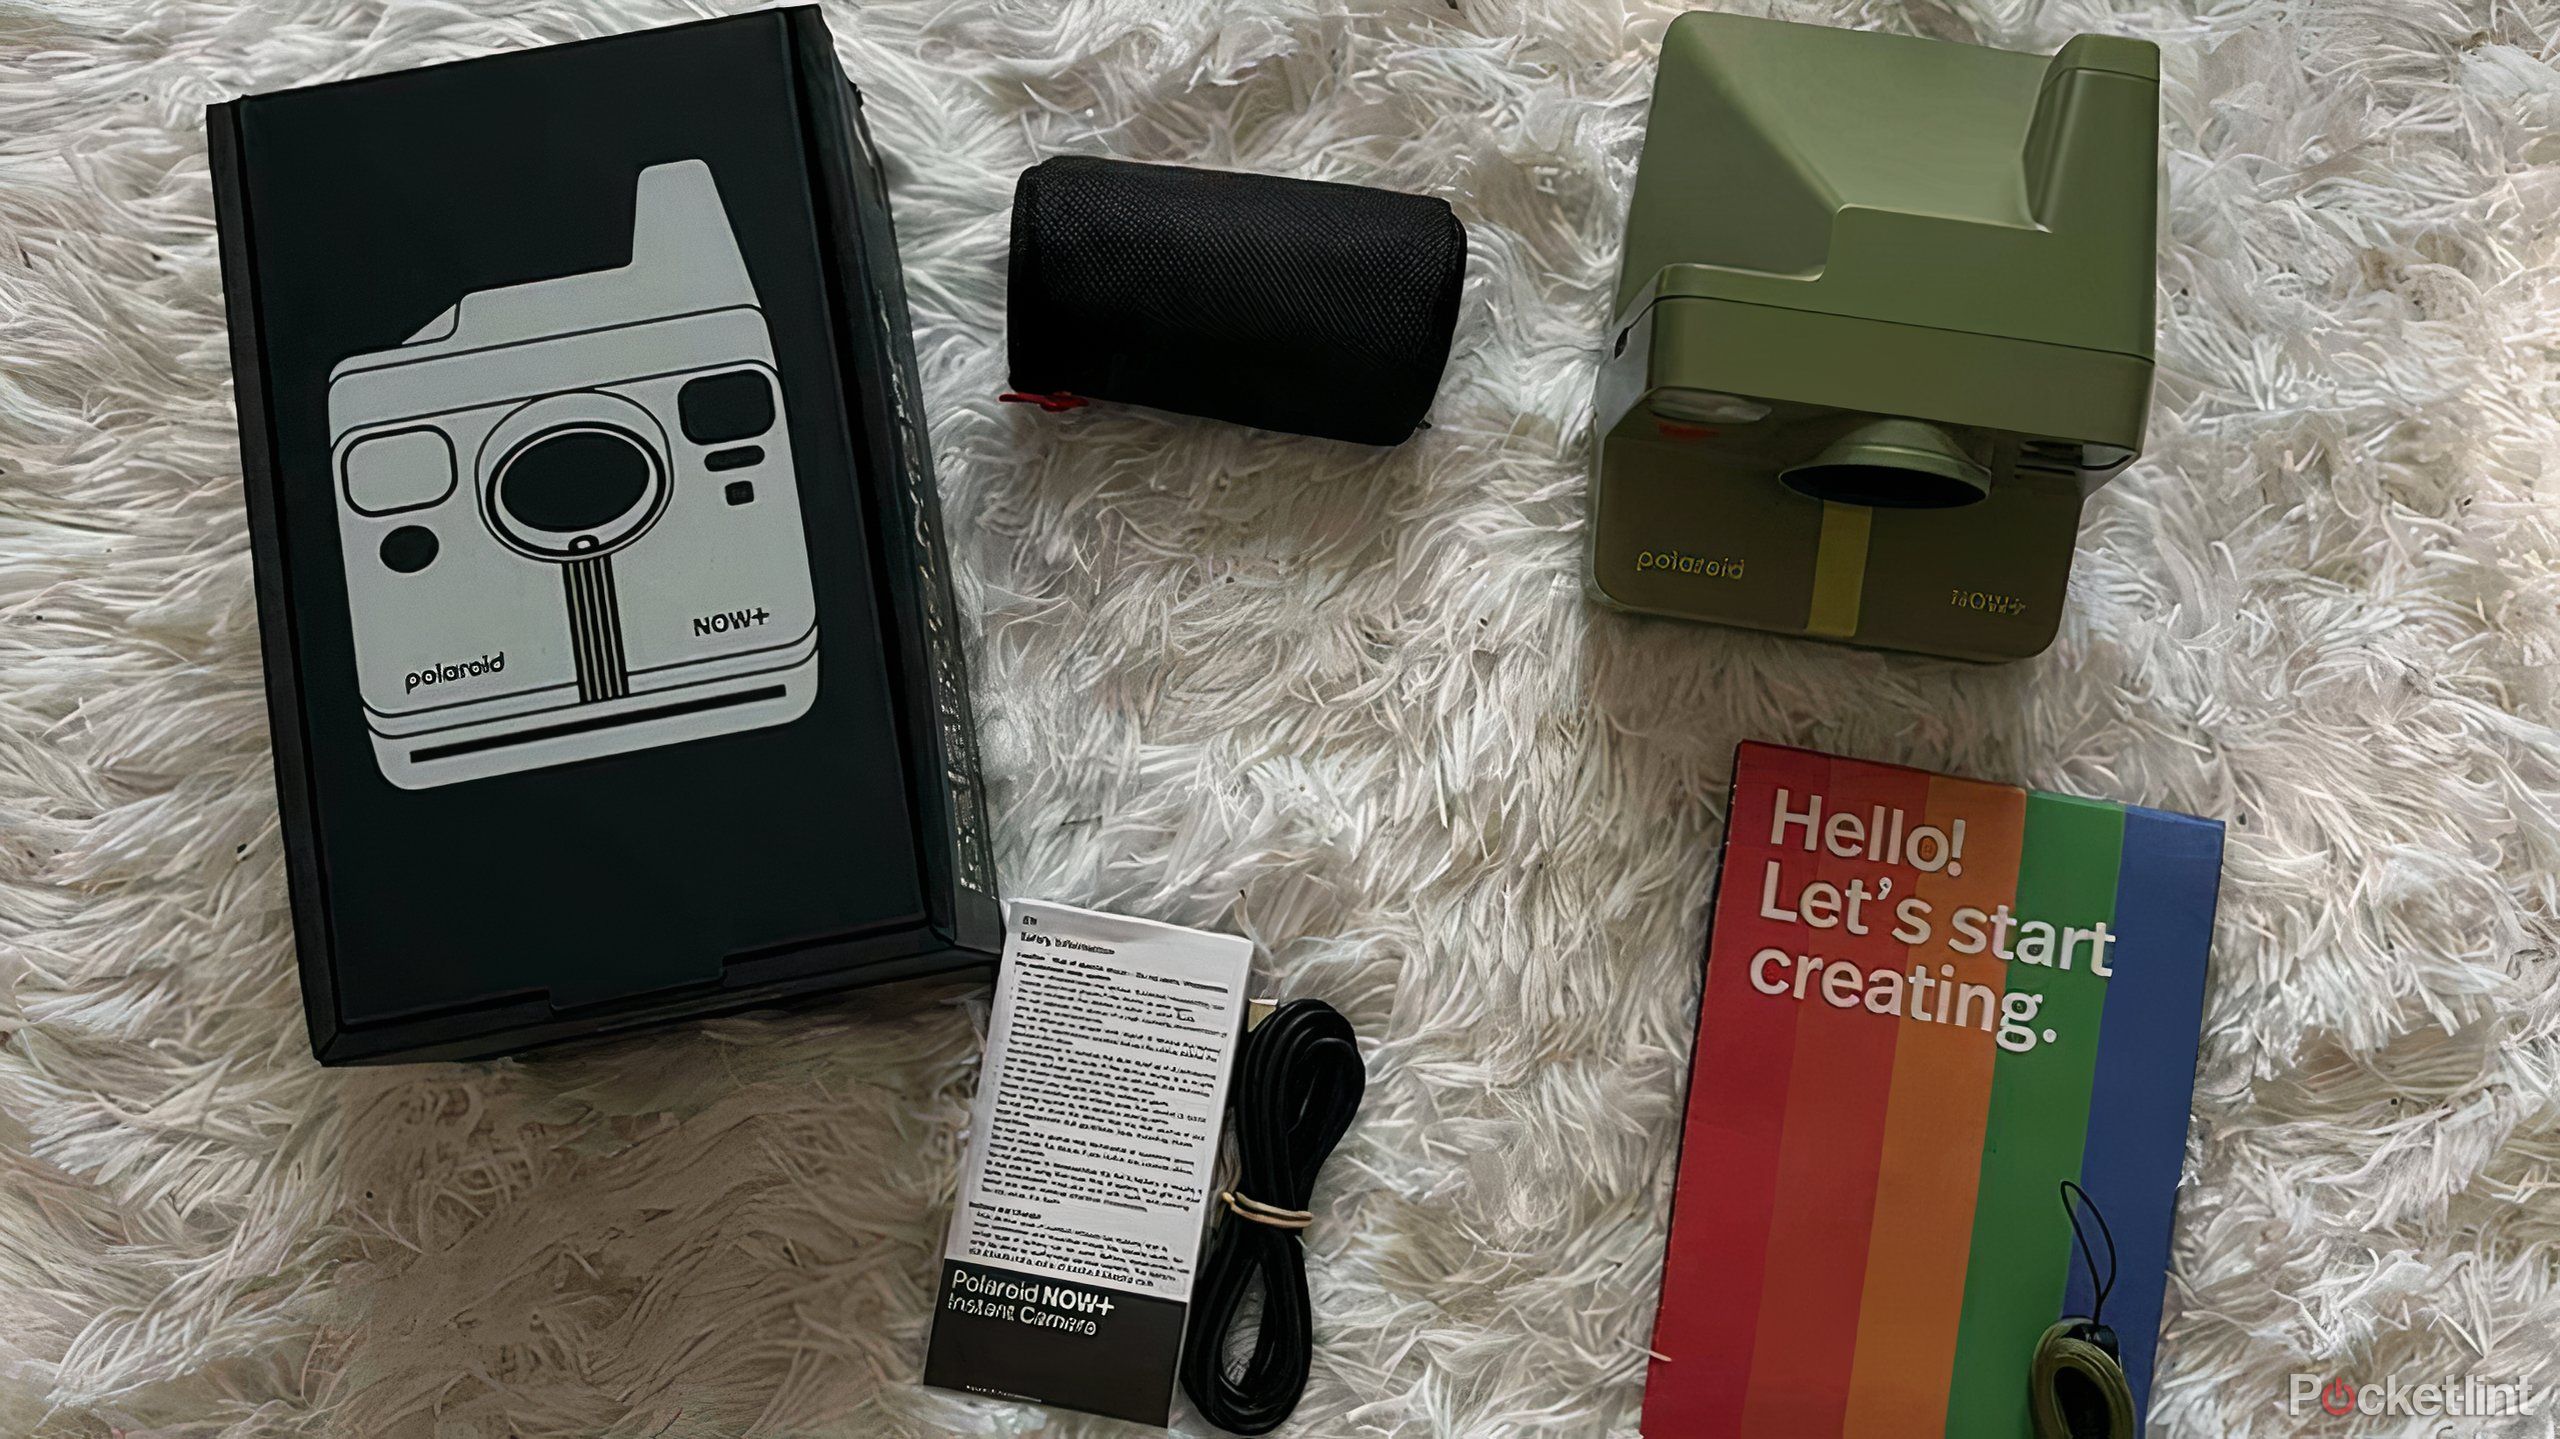 Polaroid Now Plus Gen 2 instant camera with handbook, lens case, box